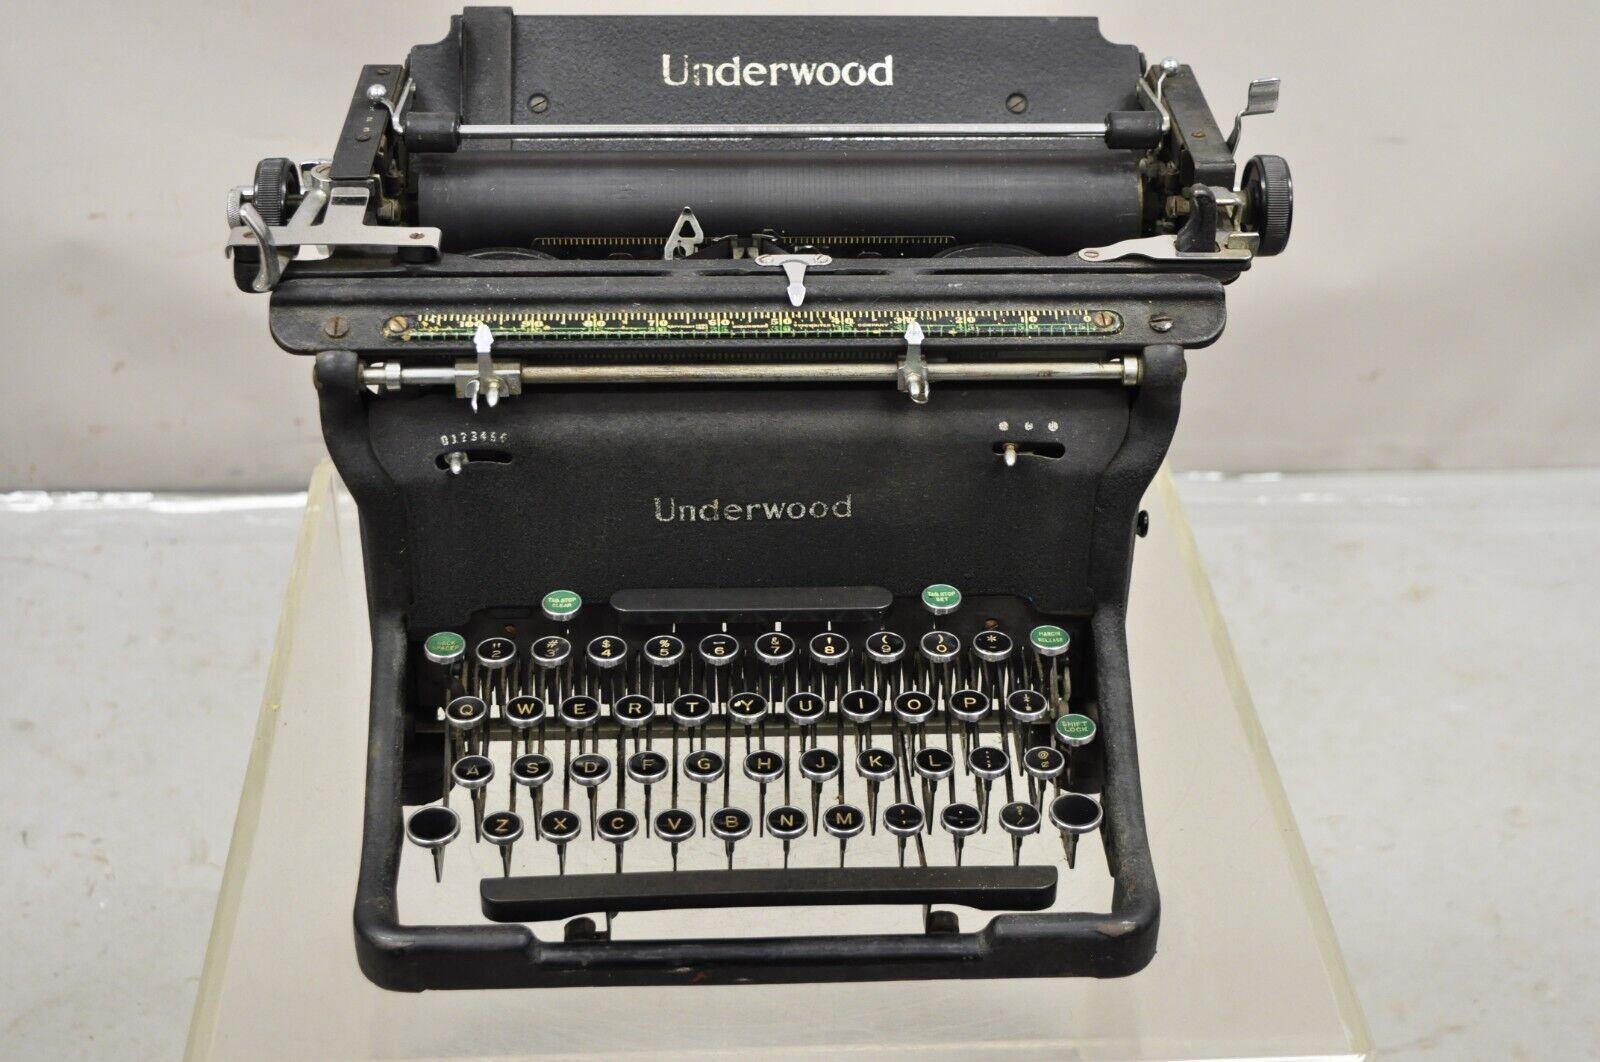 Antique 1940s Underwood Manual Typewriter. Circa 1940s. Measurements: 9